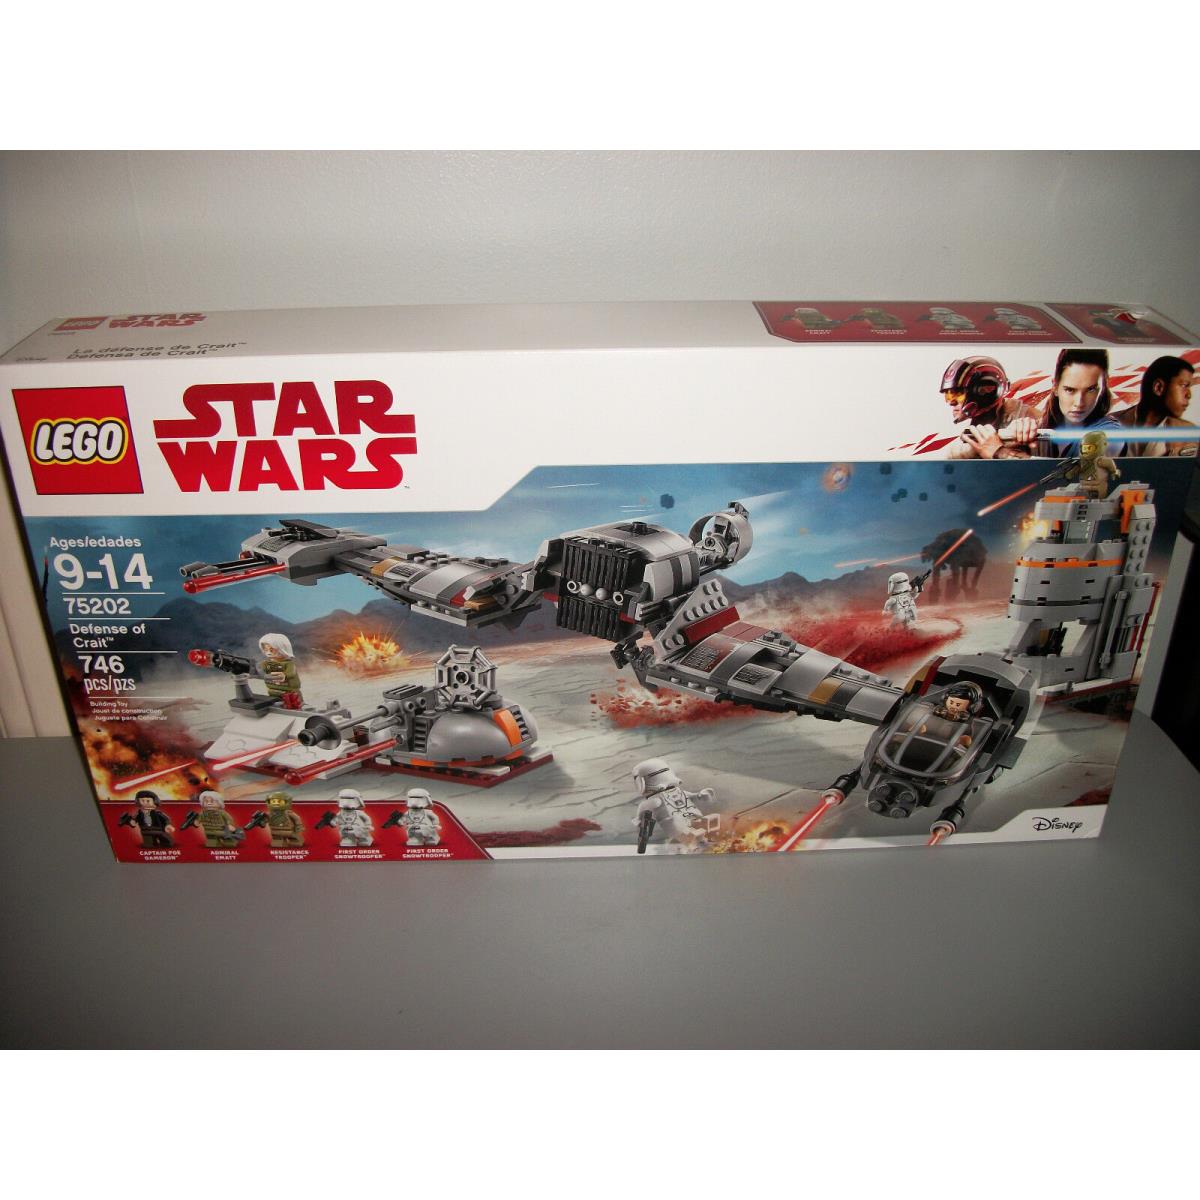 Lego Star Wars Defense of Crait 75202 Gift Toy